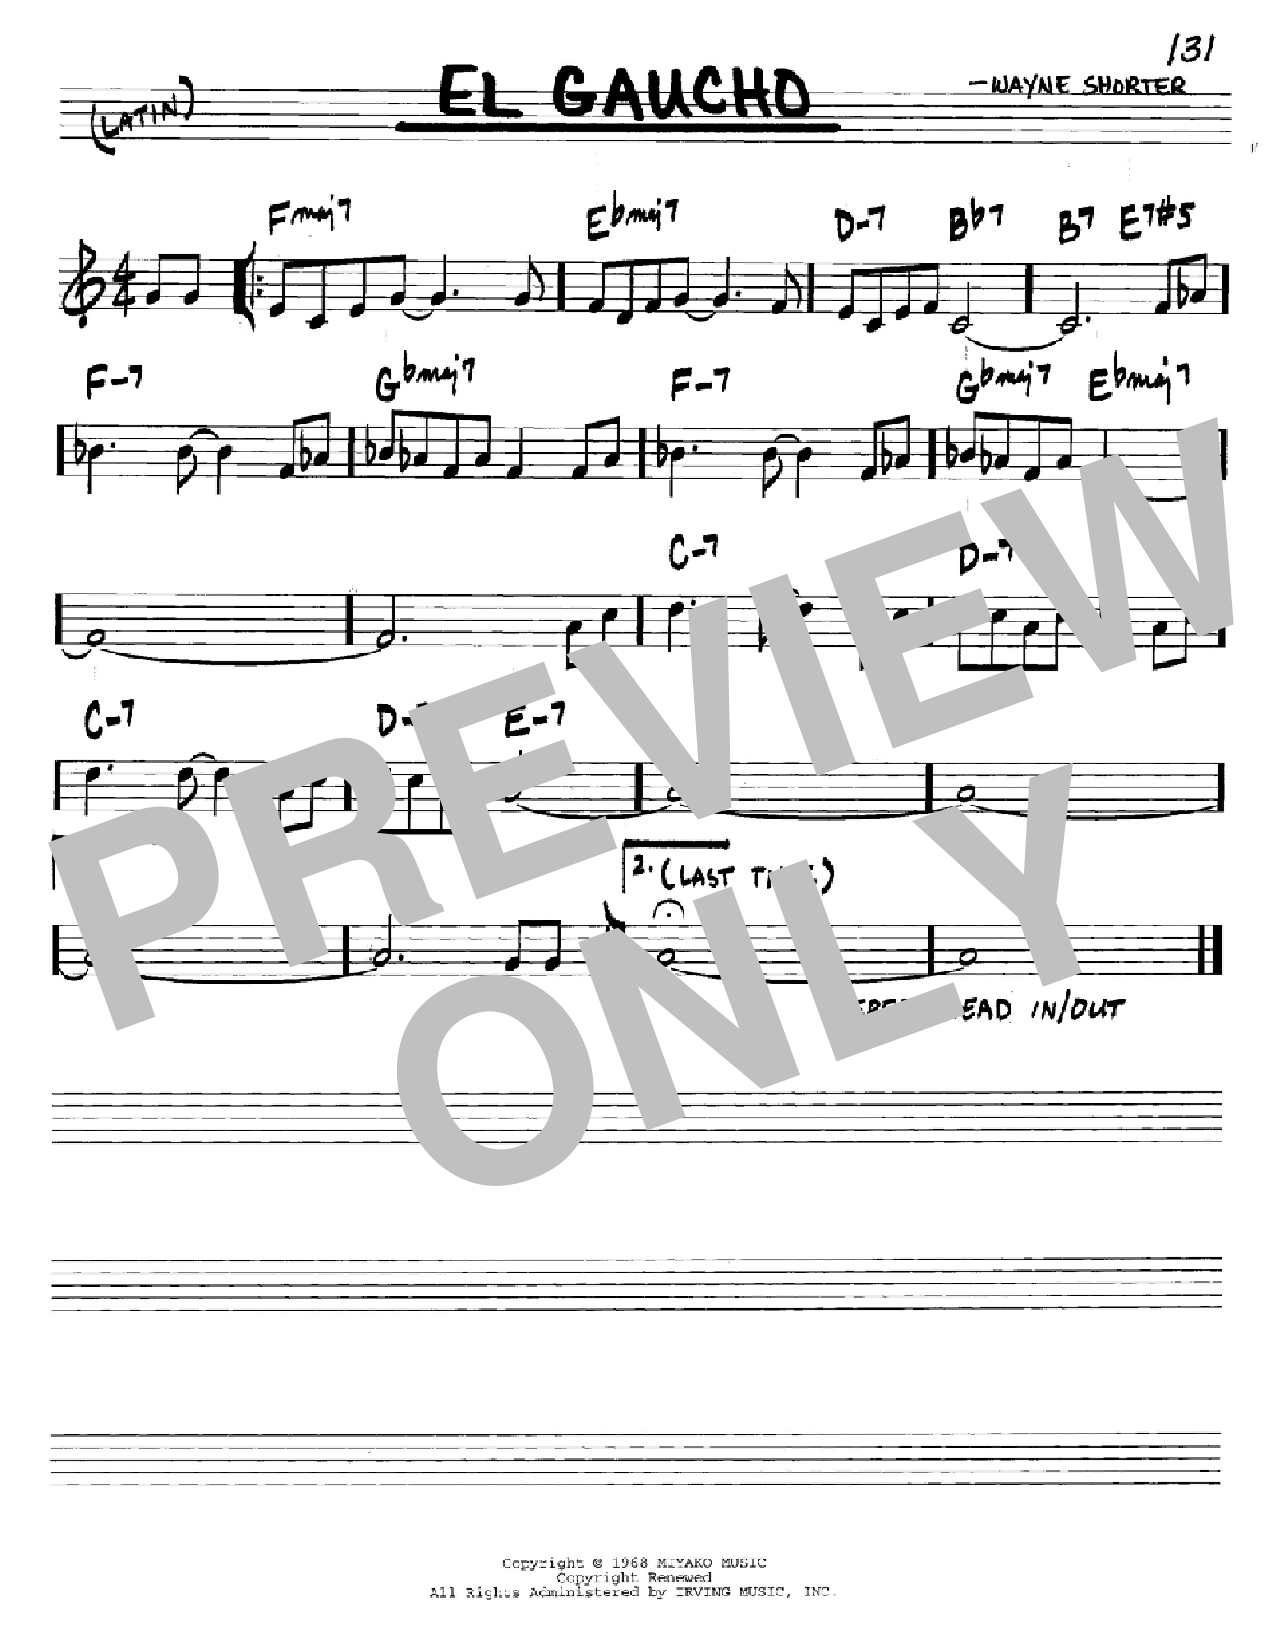 Wayne Shorter El Gaucho Sheet Music Notes & Chords for Real Book - Melody & Chords - Eb Instruments - Download or Print PDF